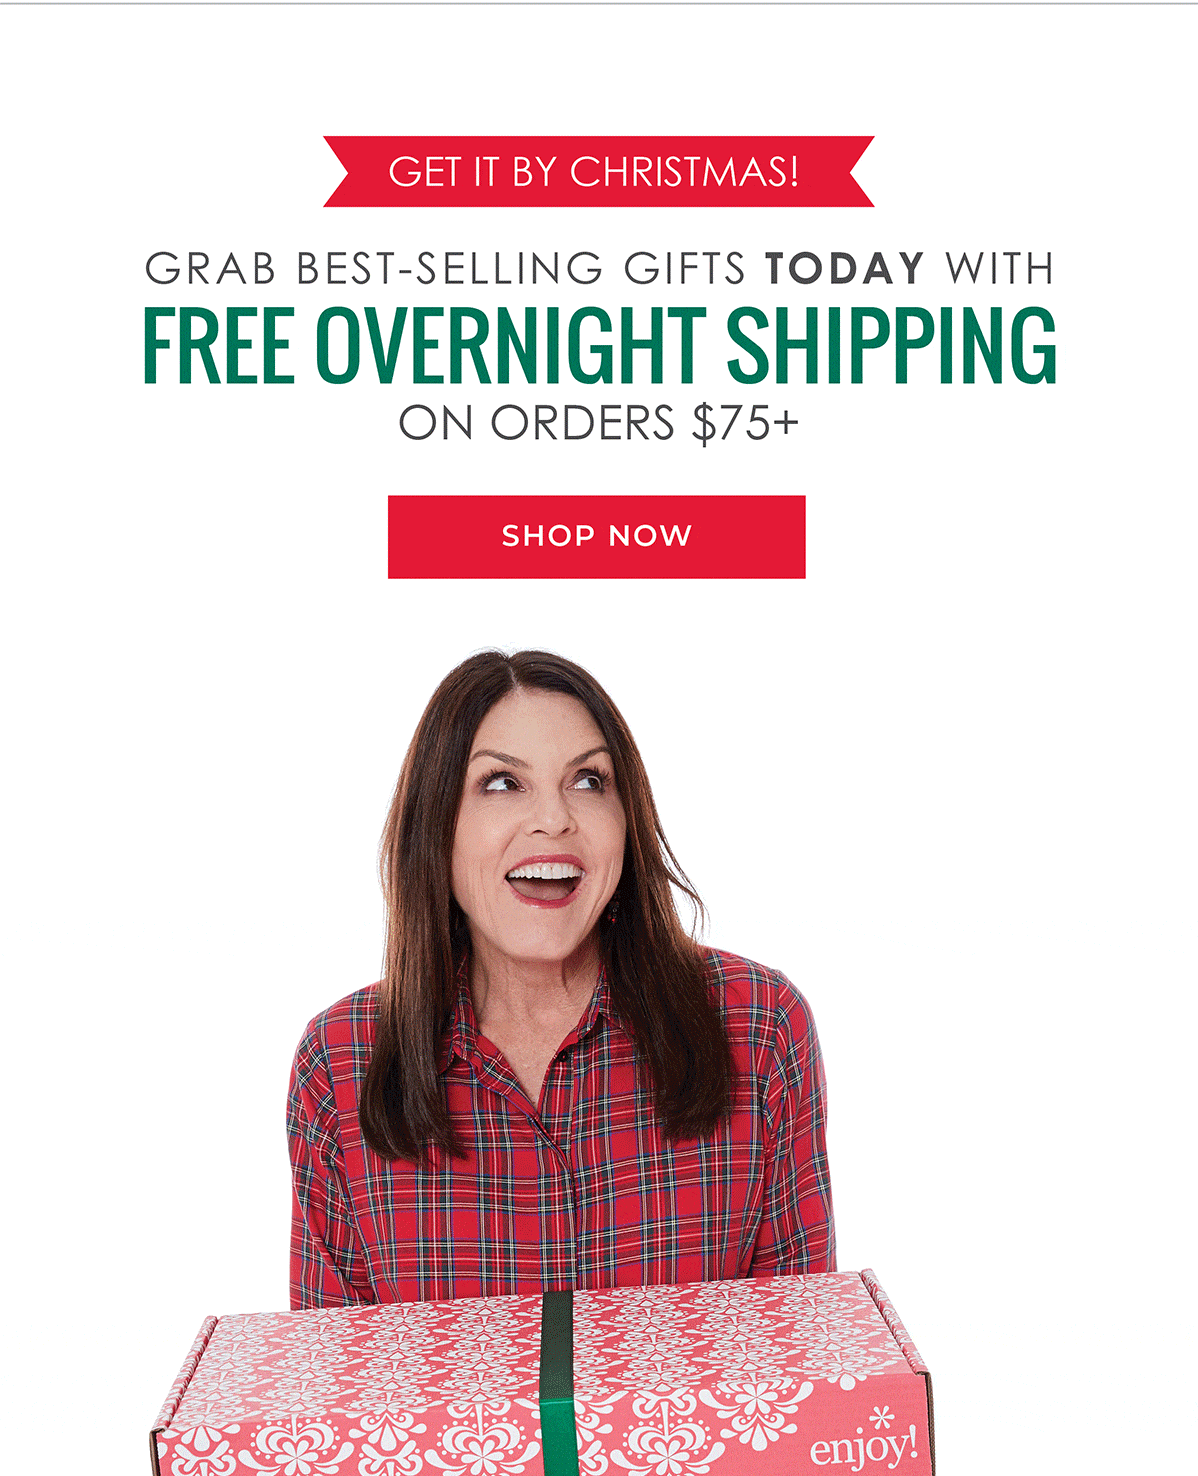 Erin Condren Flash Sale – Free Overnight Shipping!